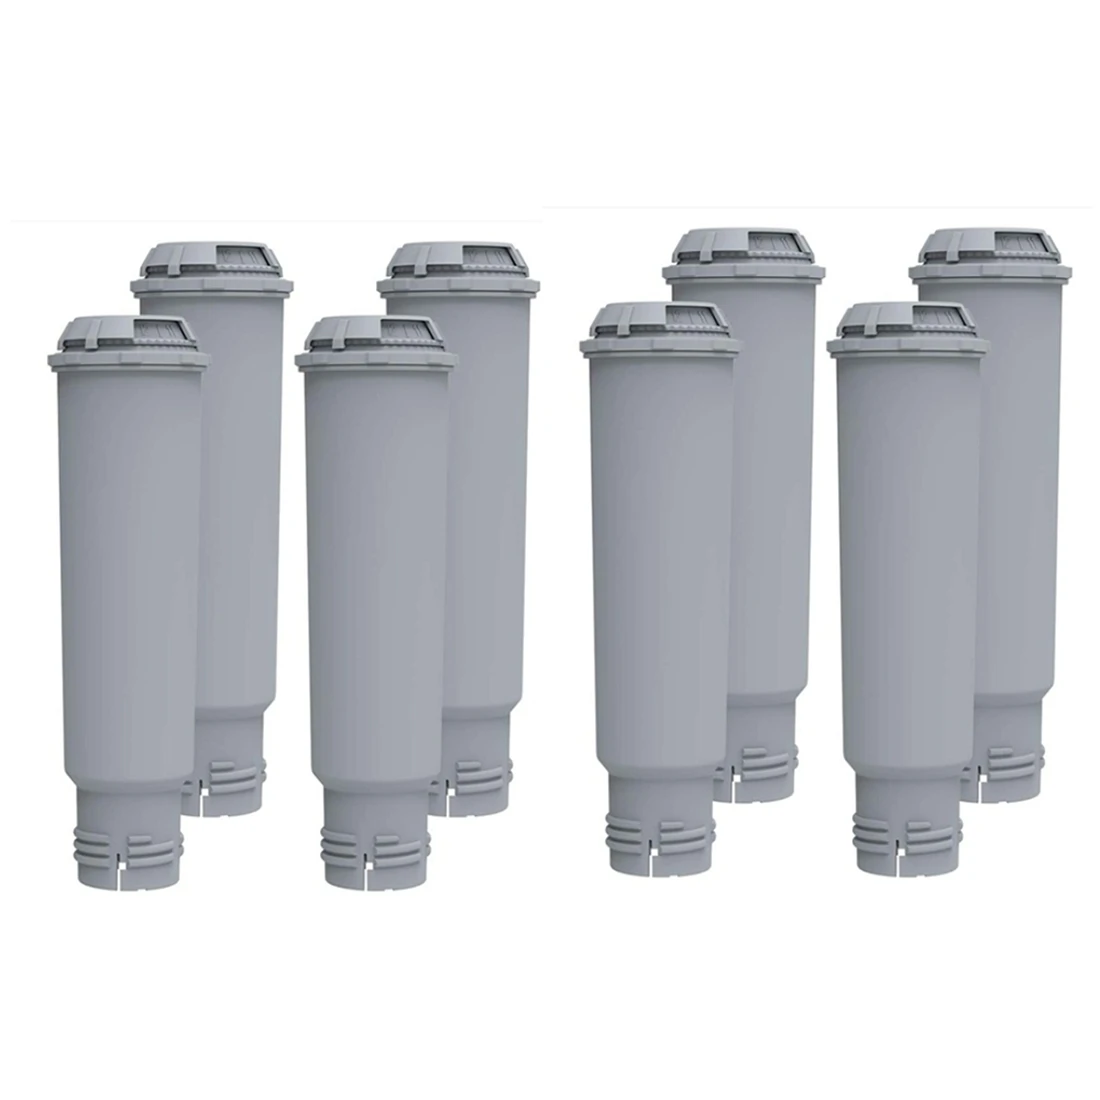 

8 PCS Espresso Machine Water Filter for Krups Claris F088 Aqua Filter System,for Siemens,Bosch,Nivona,Gaggenau,AEG,Neff